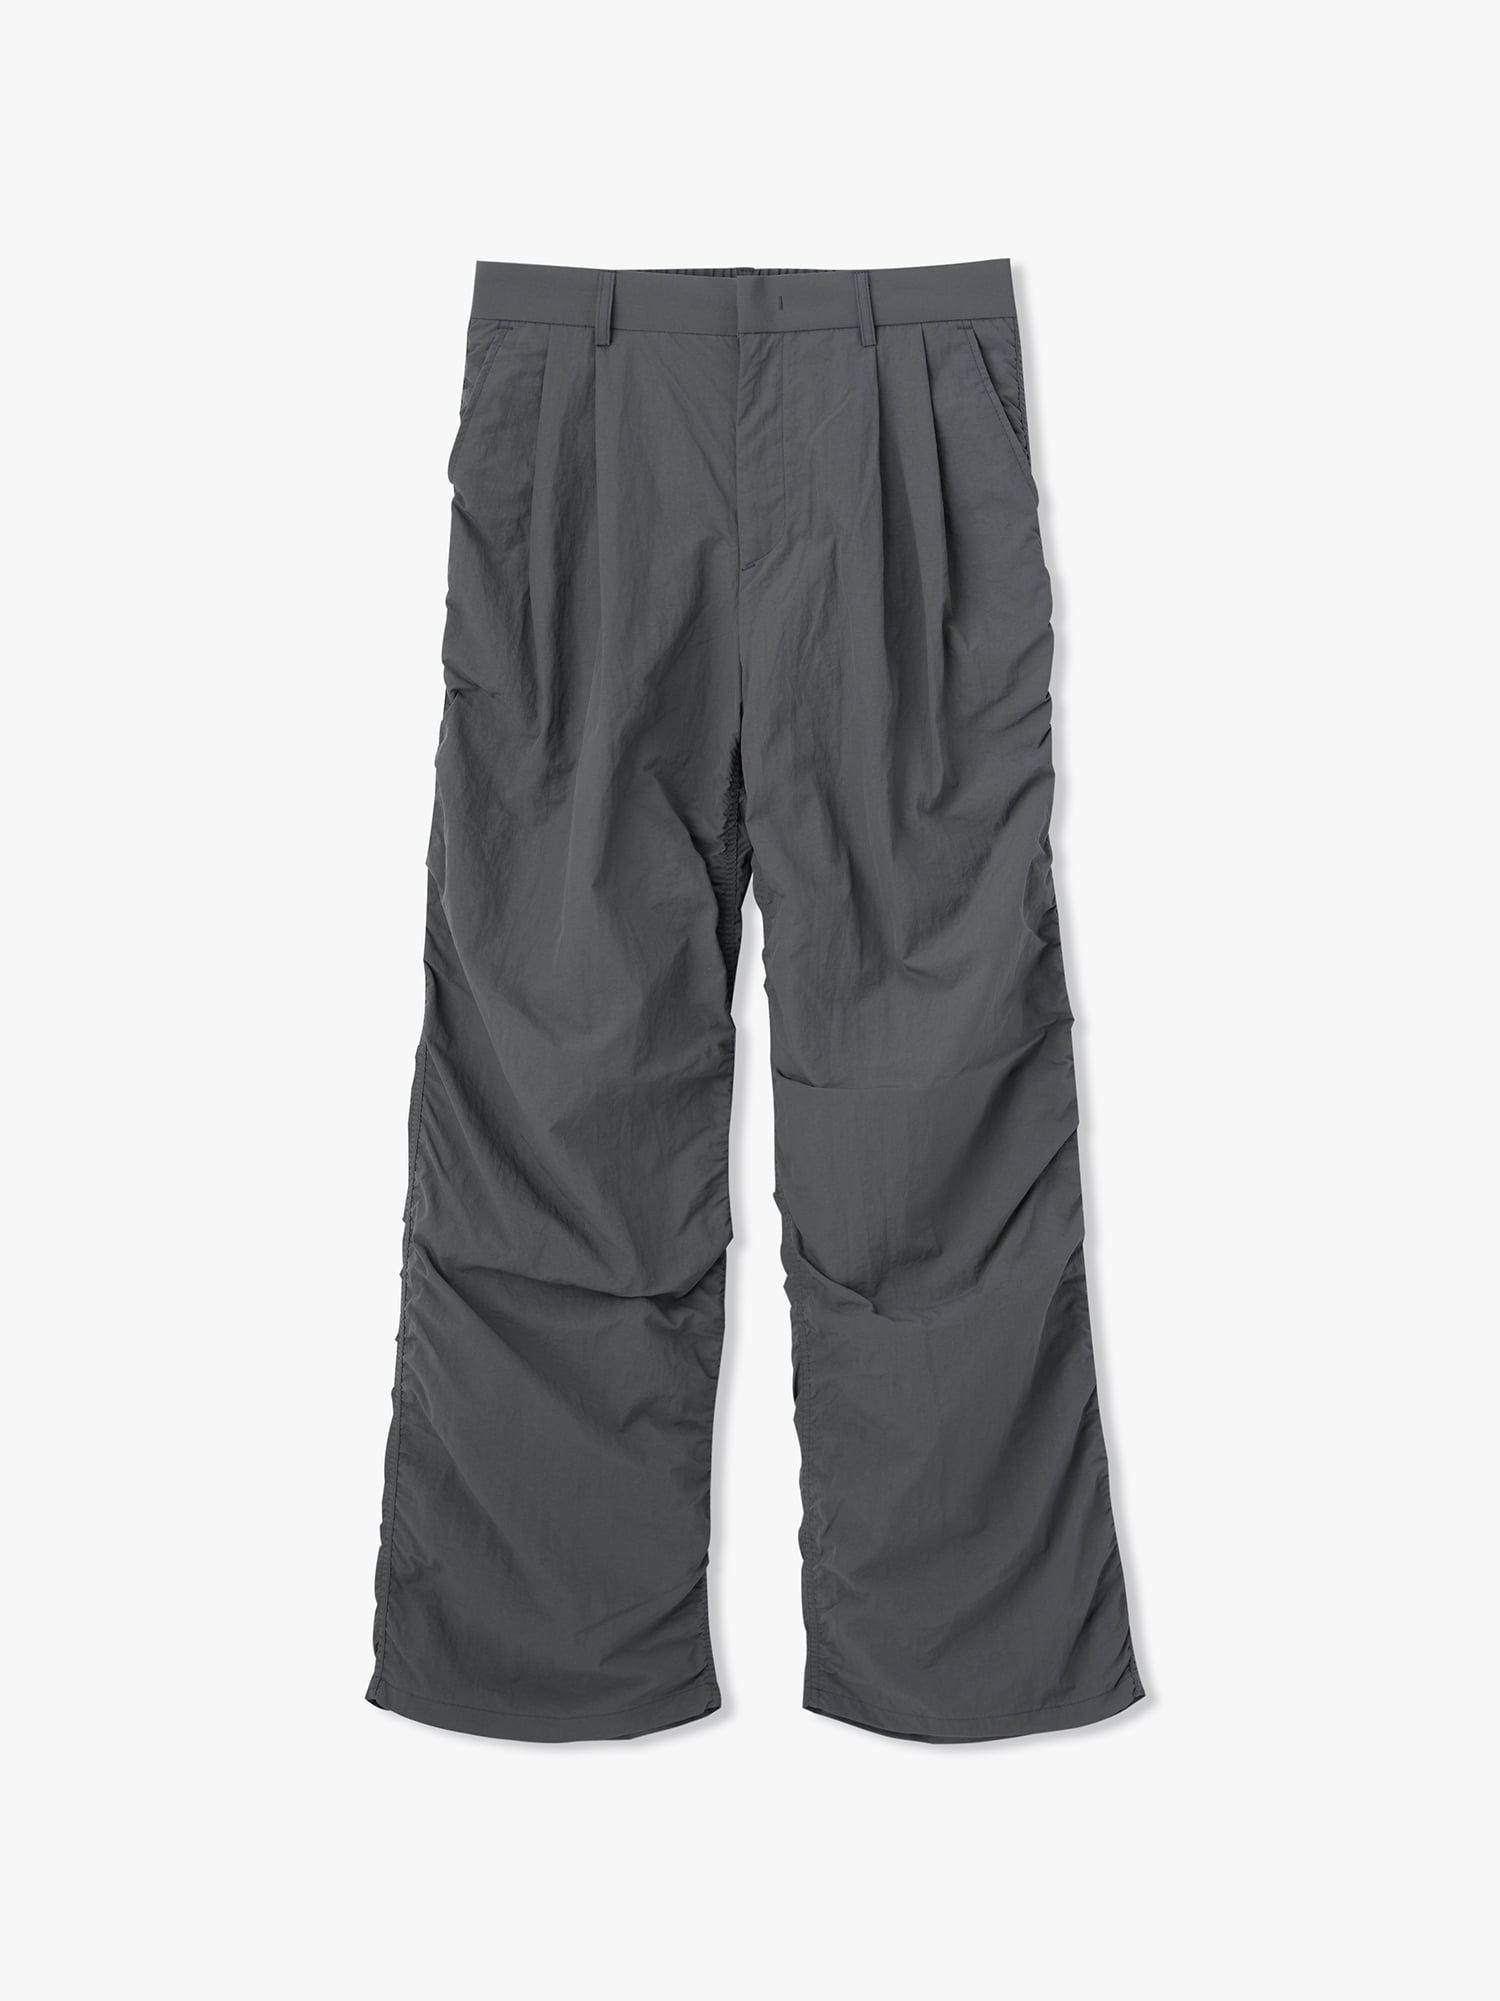 Wind Nylon Shirring Pants (Charcoal)